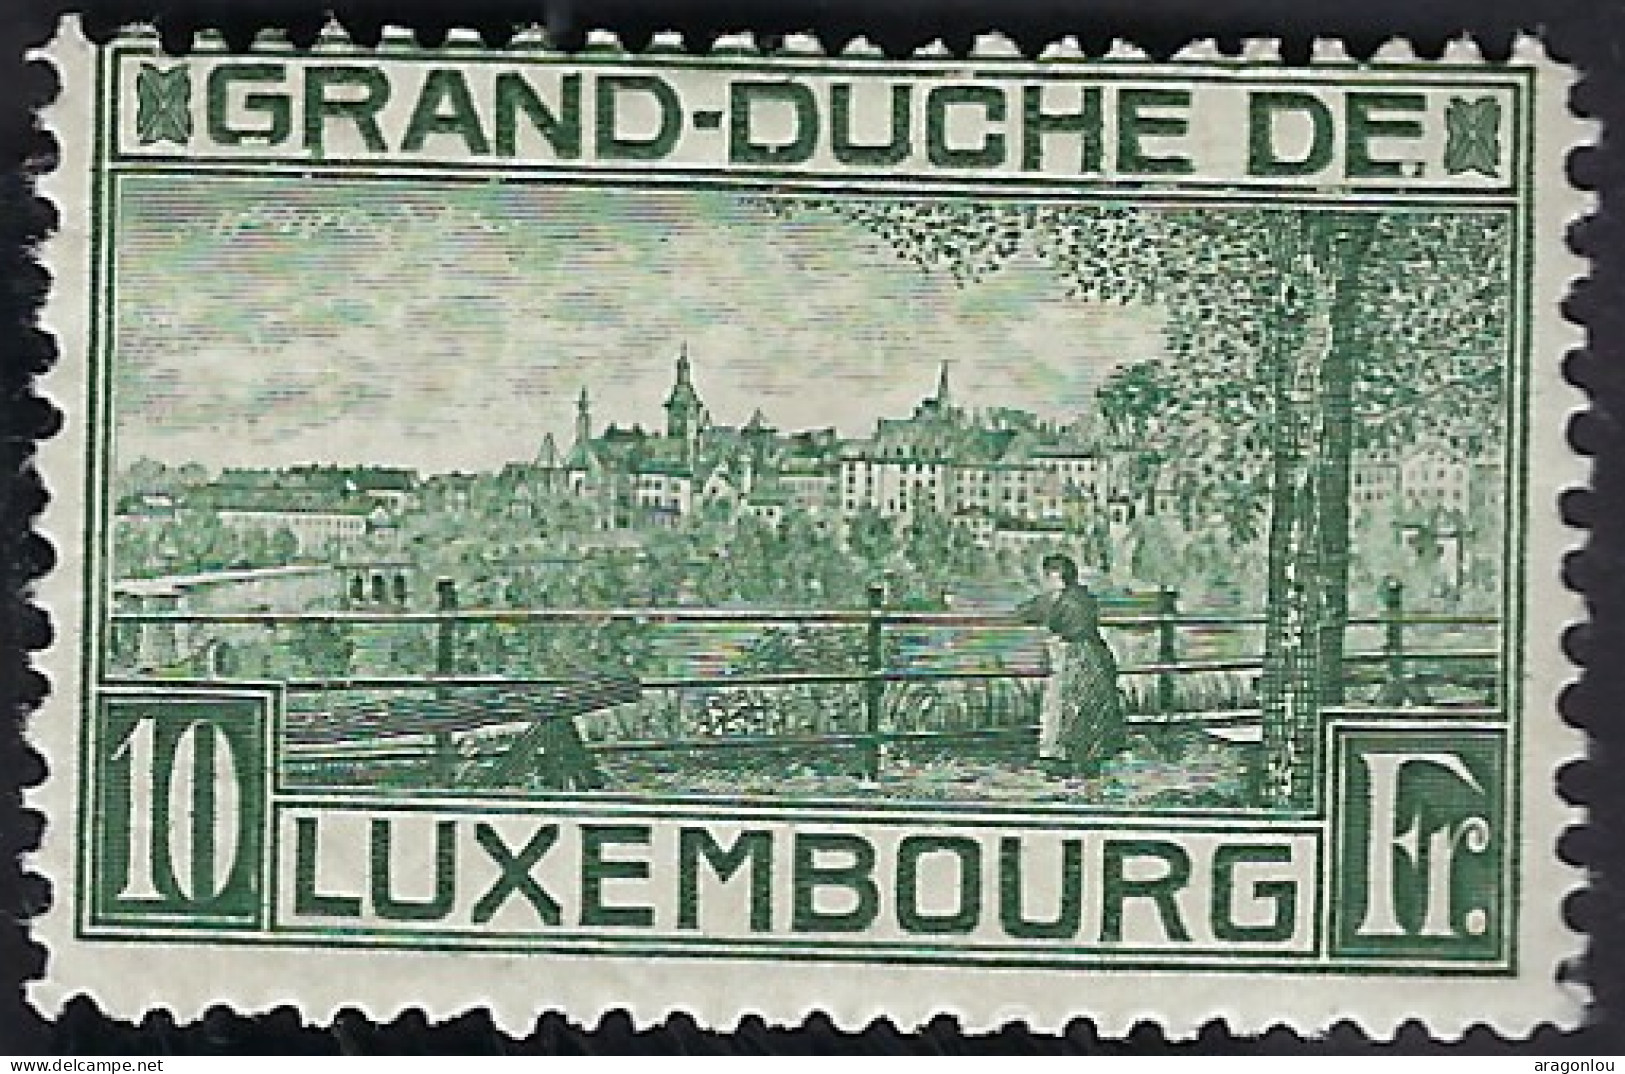 Luxembourg - Luxemburg - Timbre   1923   Naissance  Princesse Elisabeth   Michel 142   *   VC. 600,- Très Rare - Gebraucht